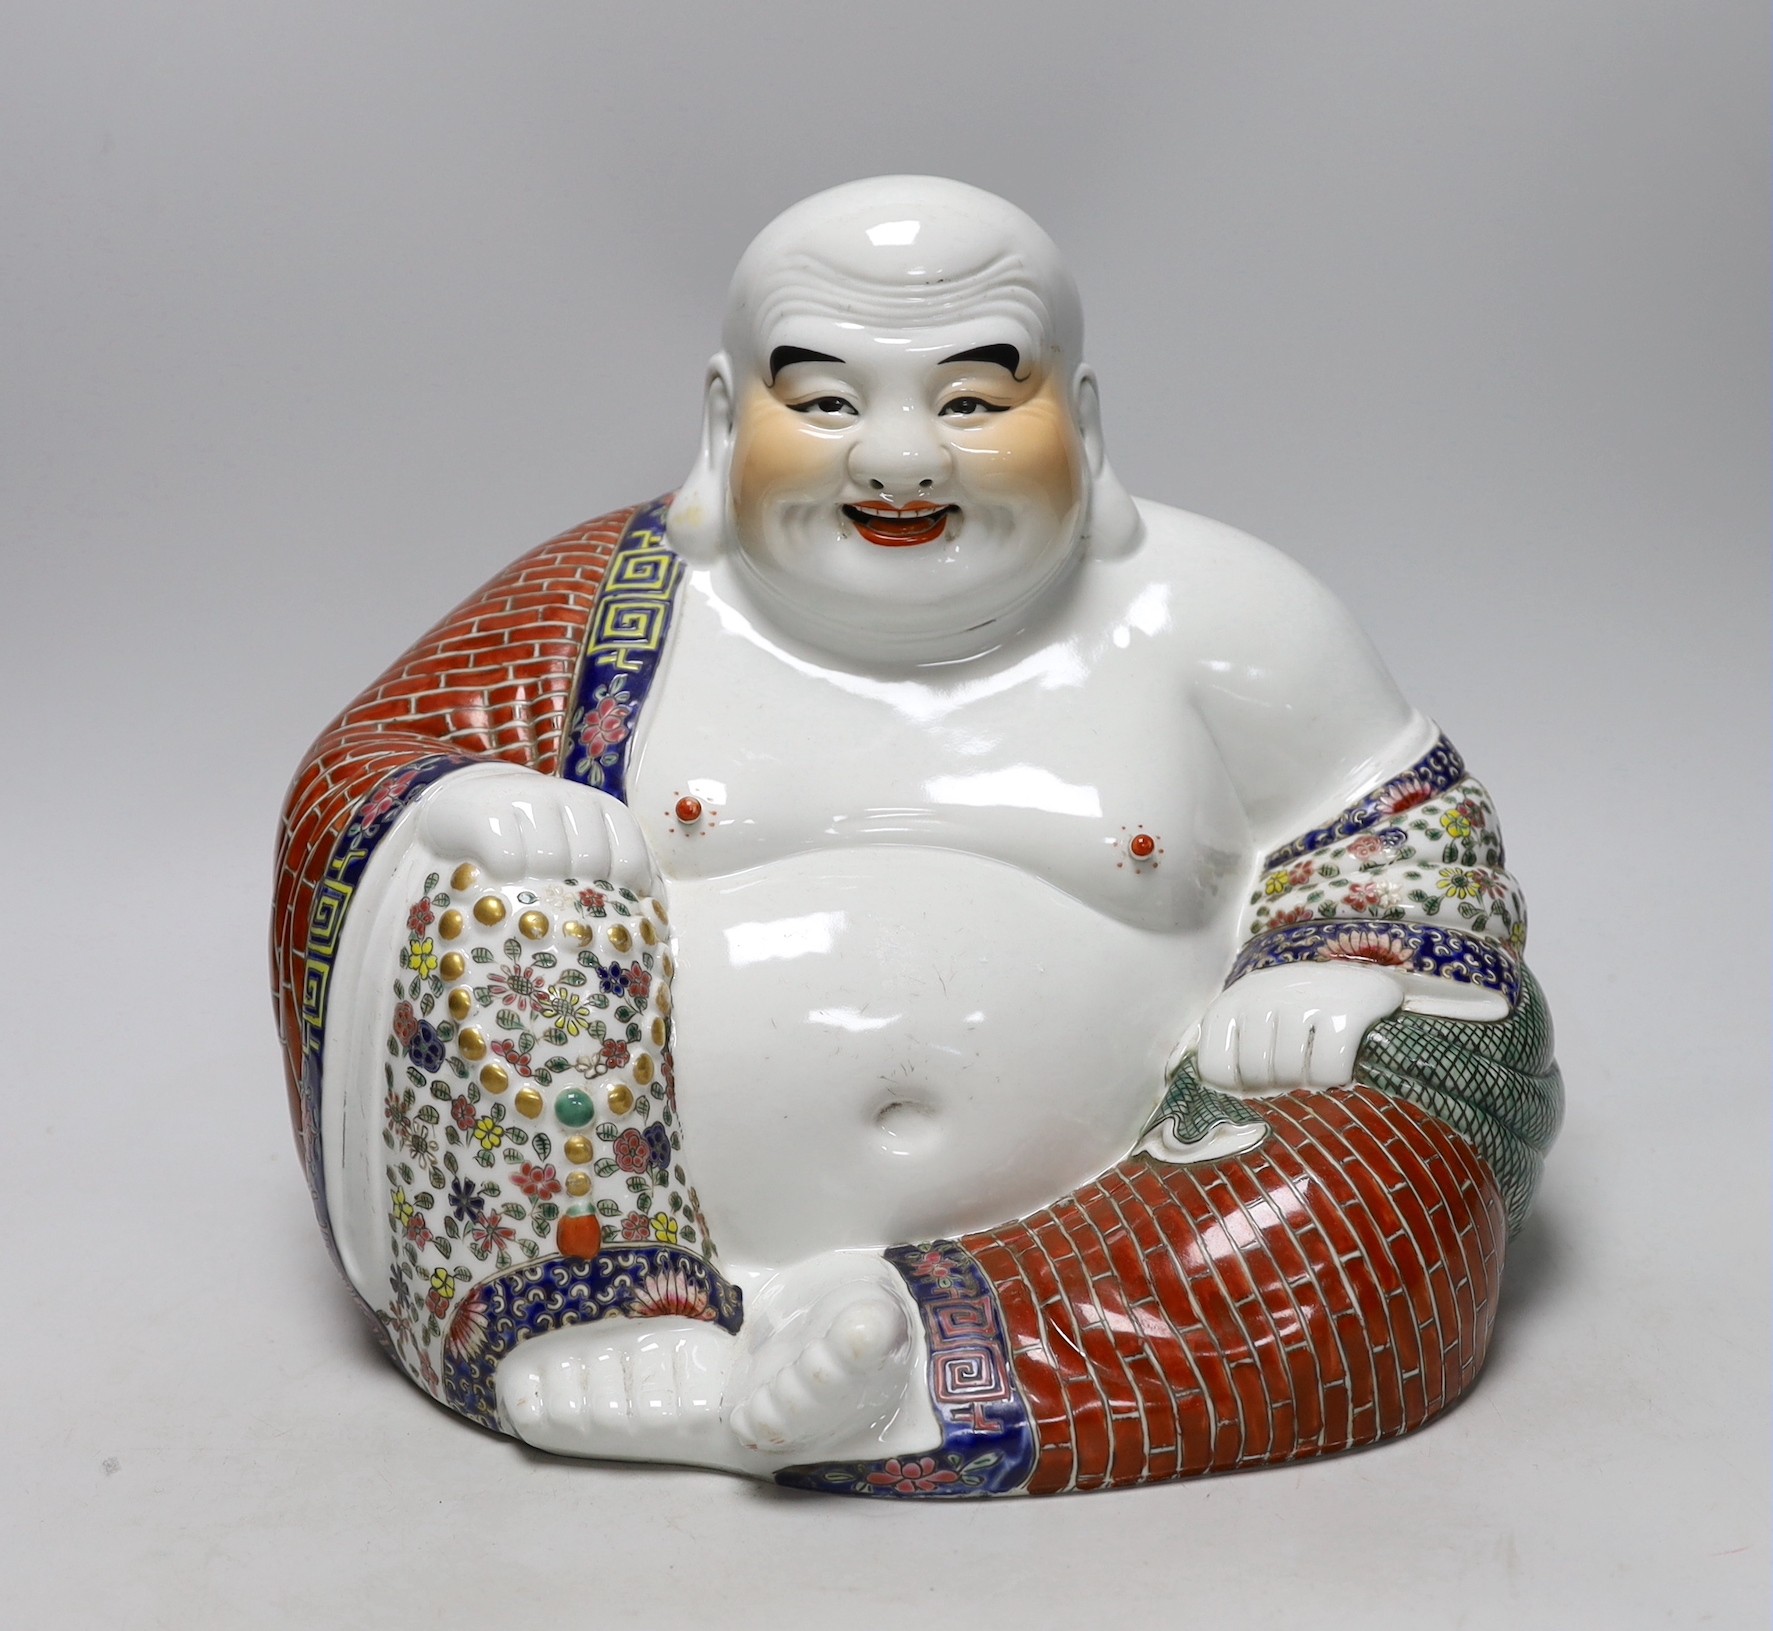 A Chinese ceramic Buddha